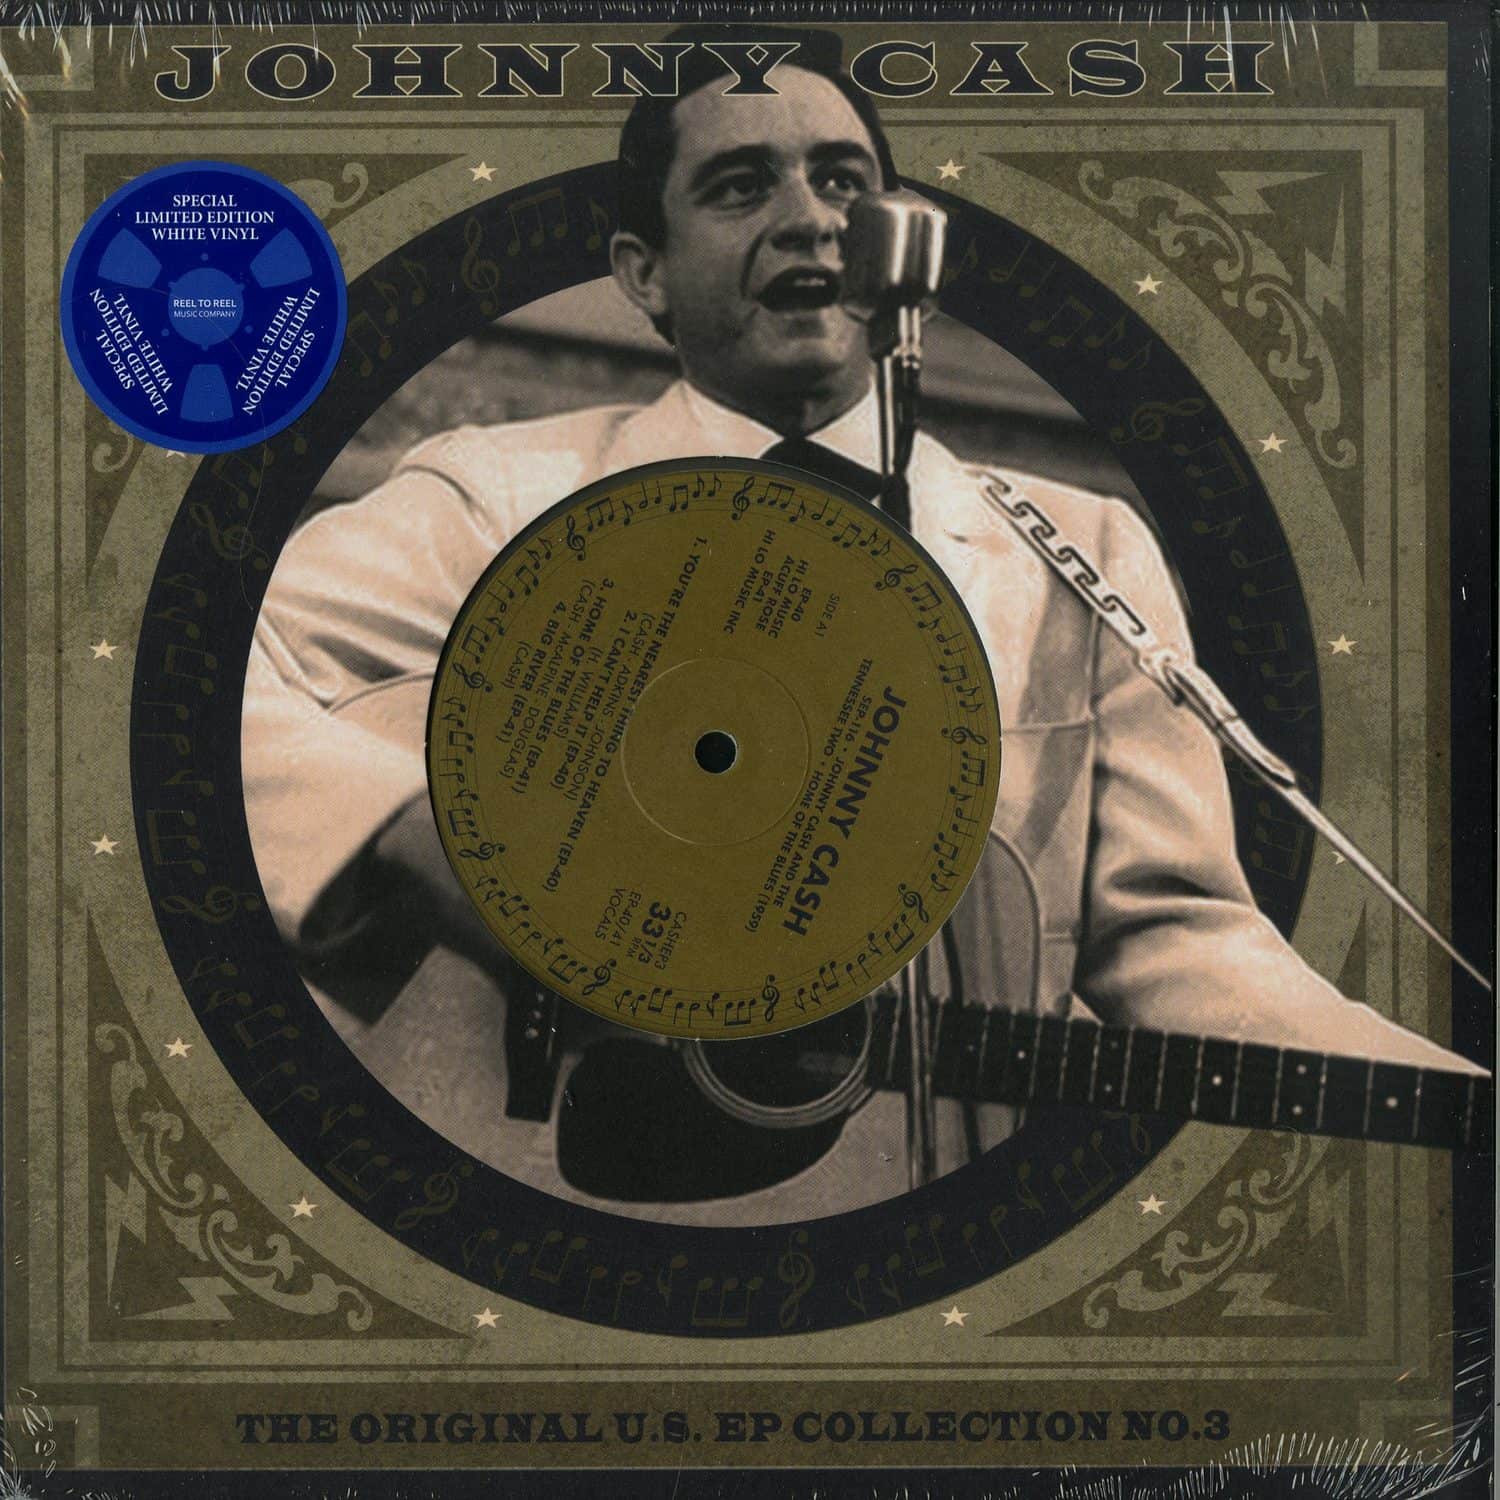 Johnny Cash - THE ORIGINAL U.S. EP COLLECTION VOL. 3 